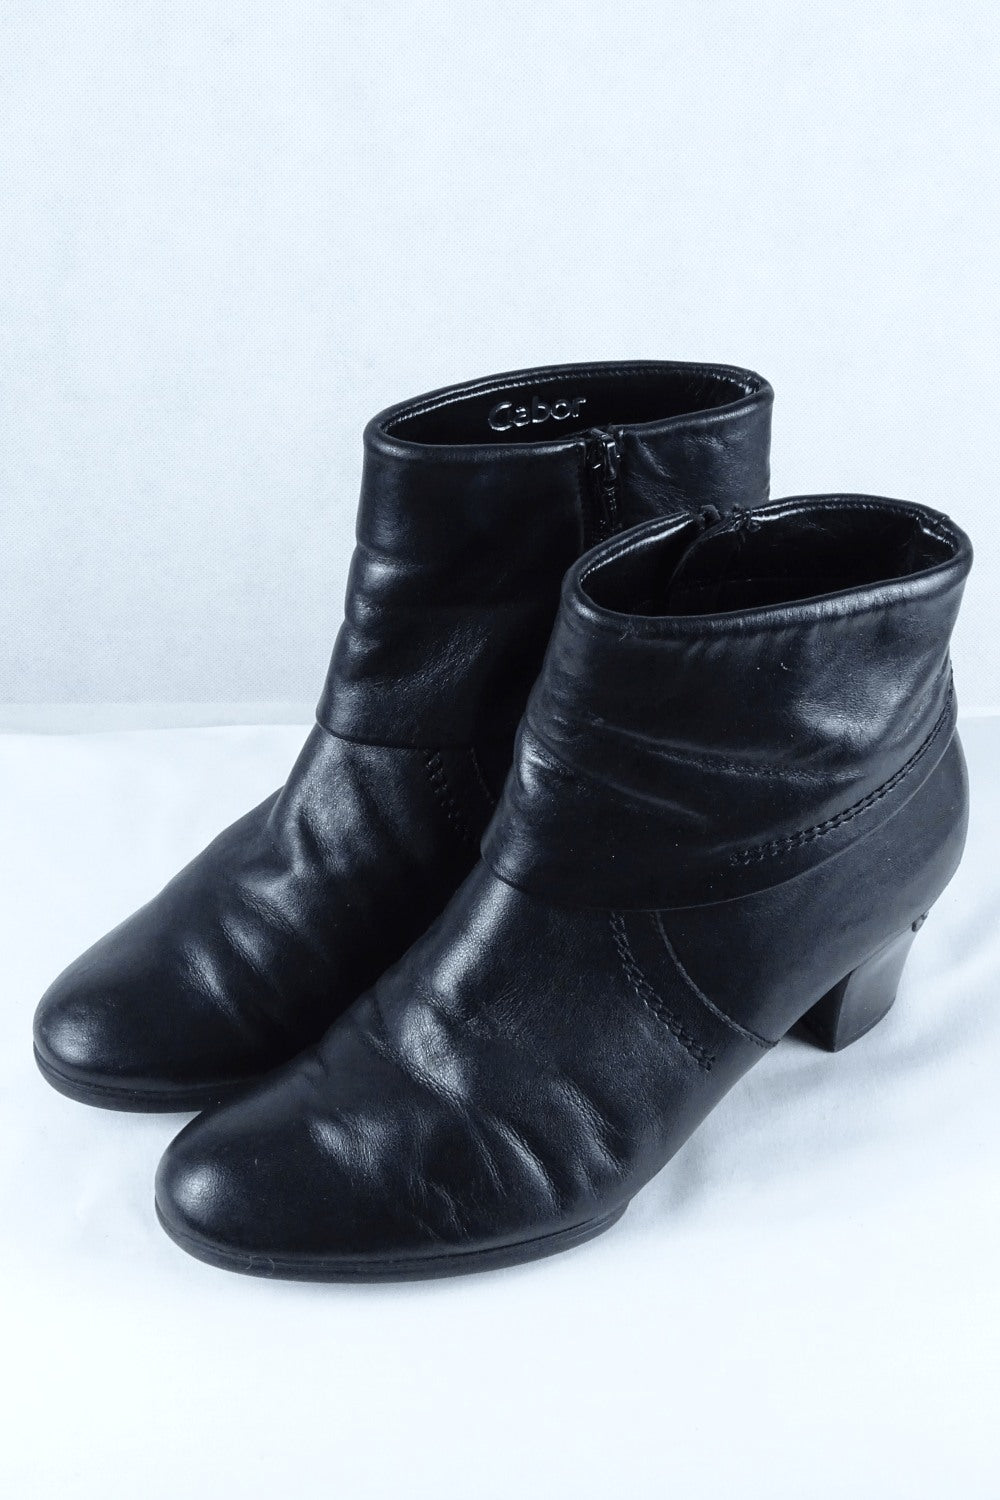 Gabor Black Boots 4.5